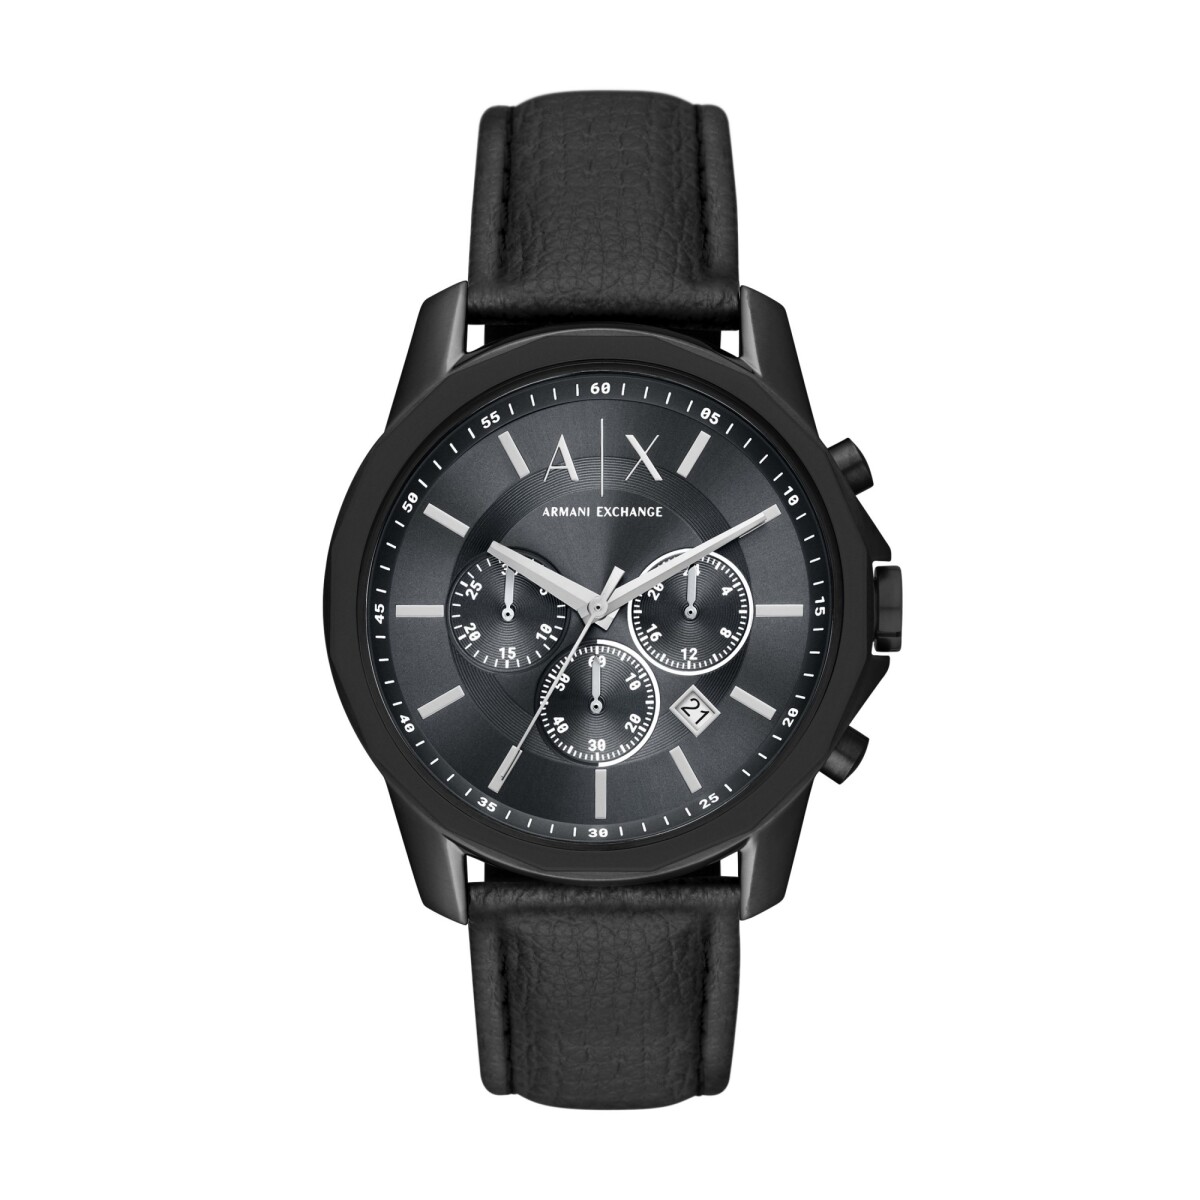 Reloj Armani Exchange Clasico Cuero Negro 